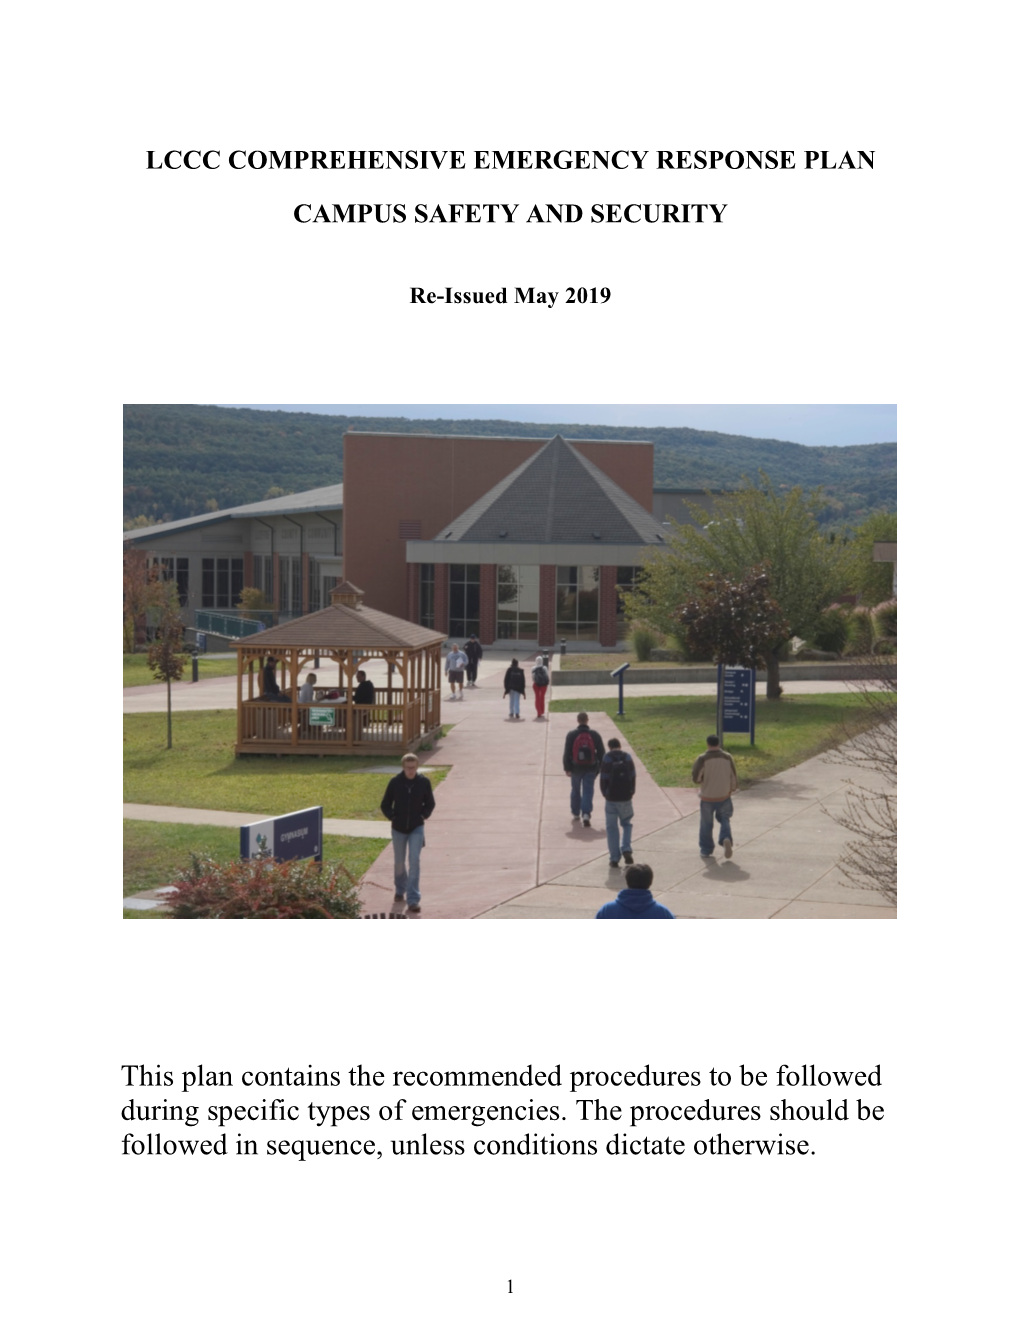 LCCC Emergency Response Plan